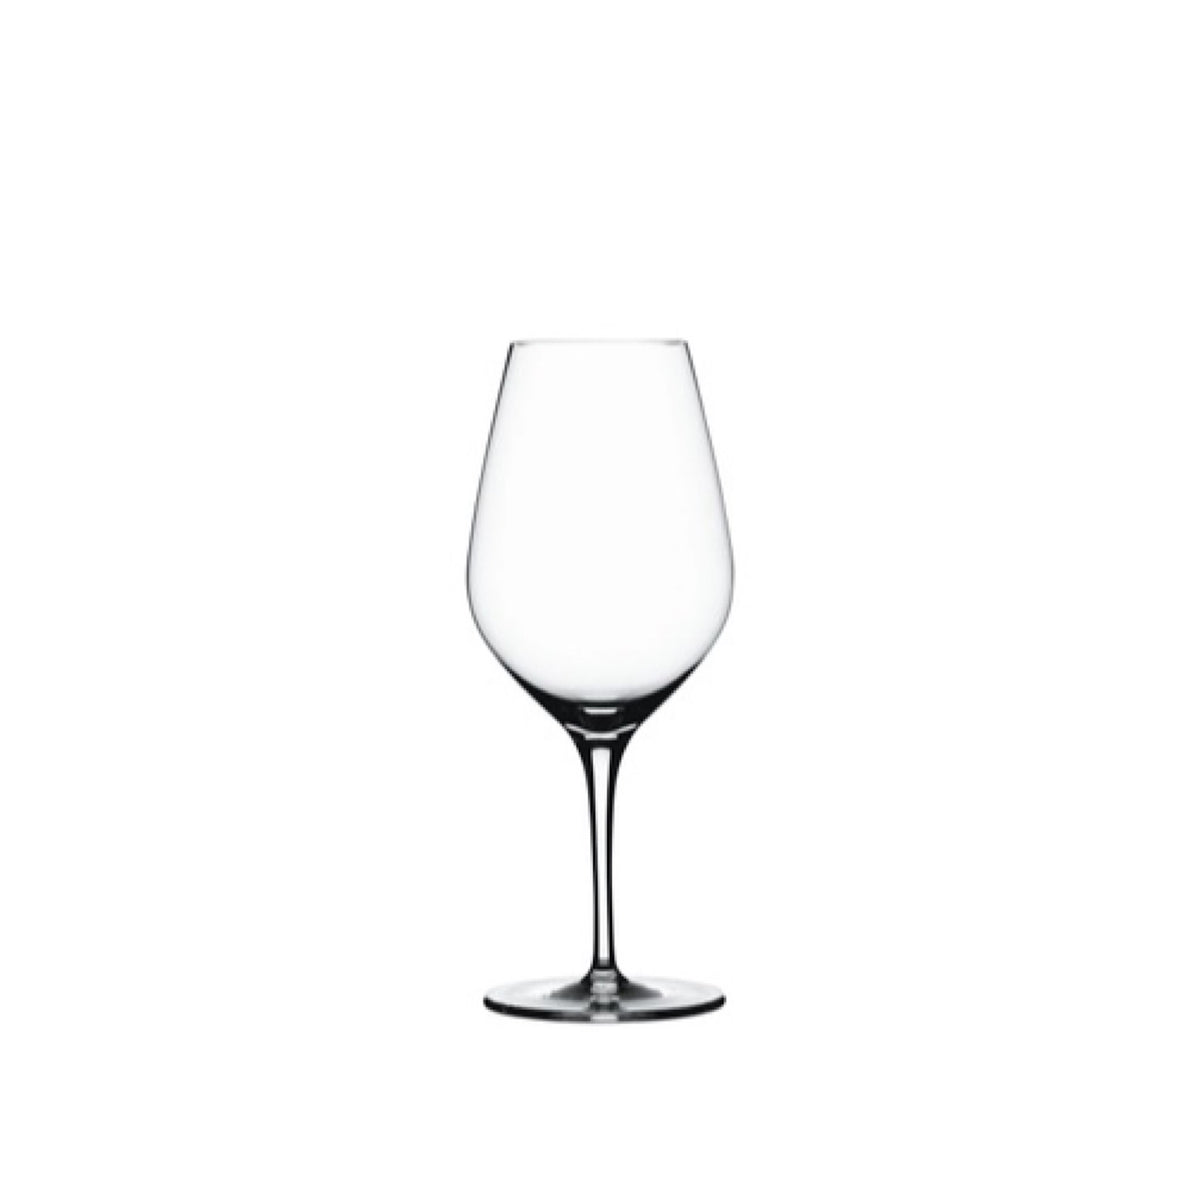 Authentis White Wine Glasses, Set of 4